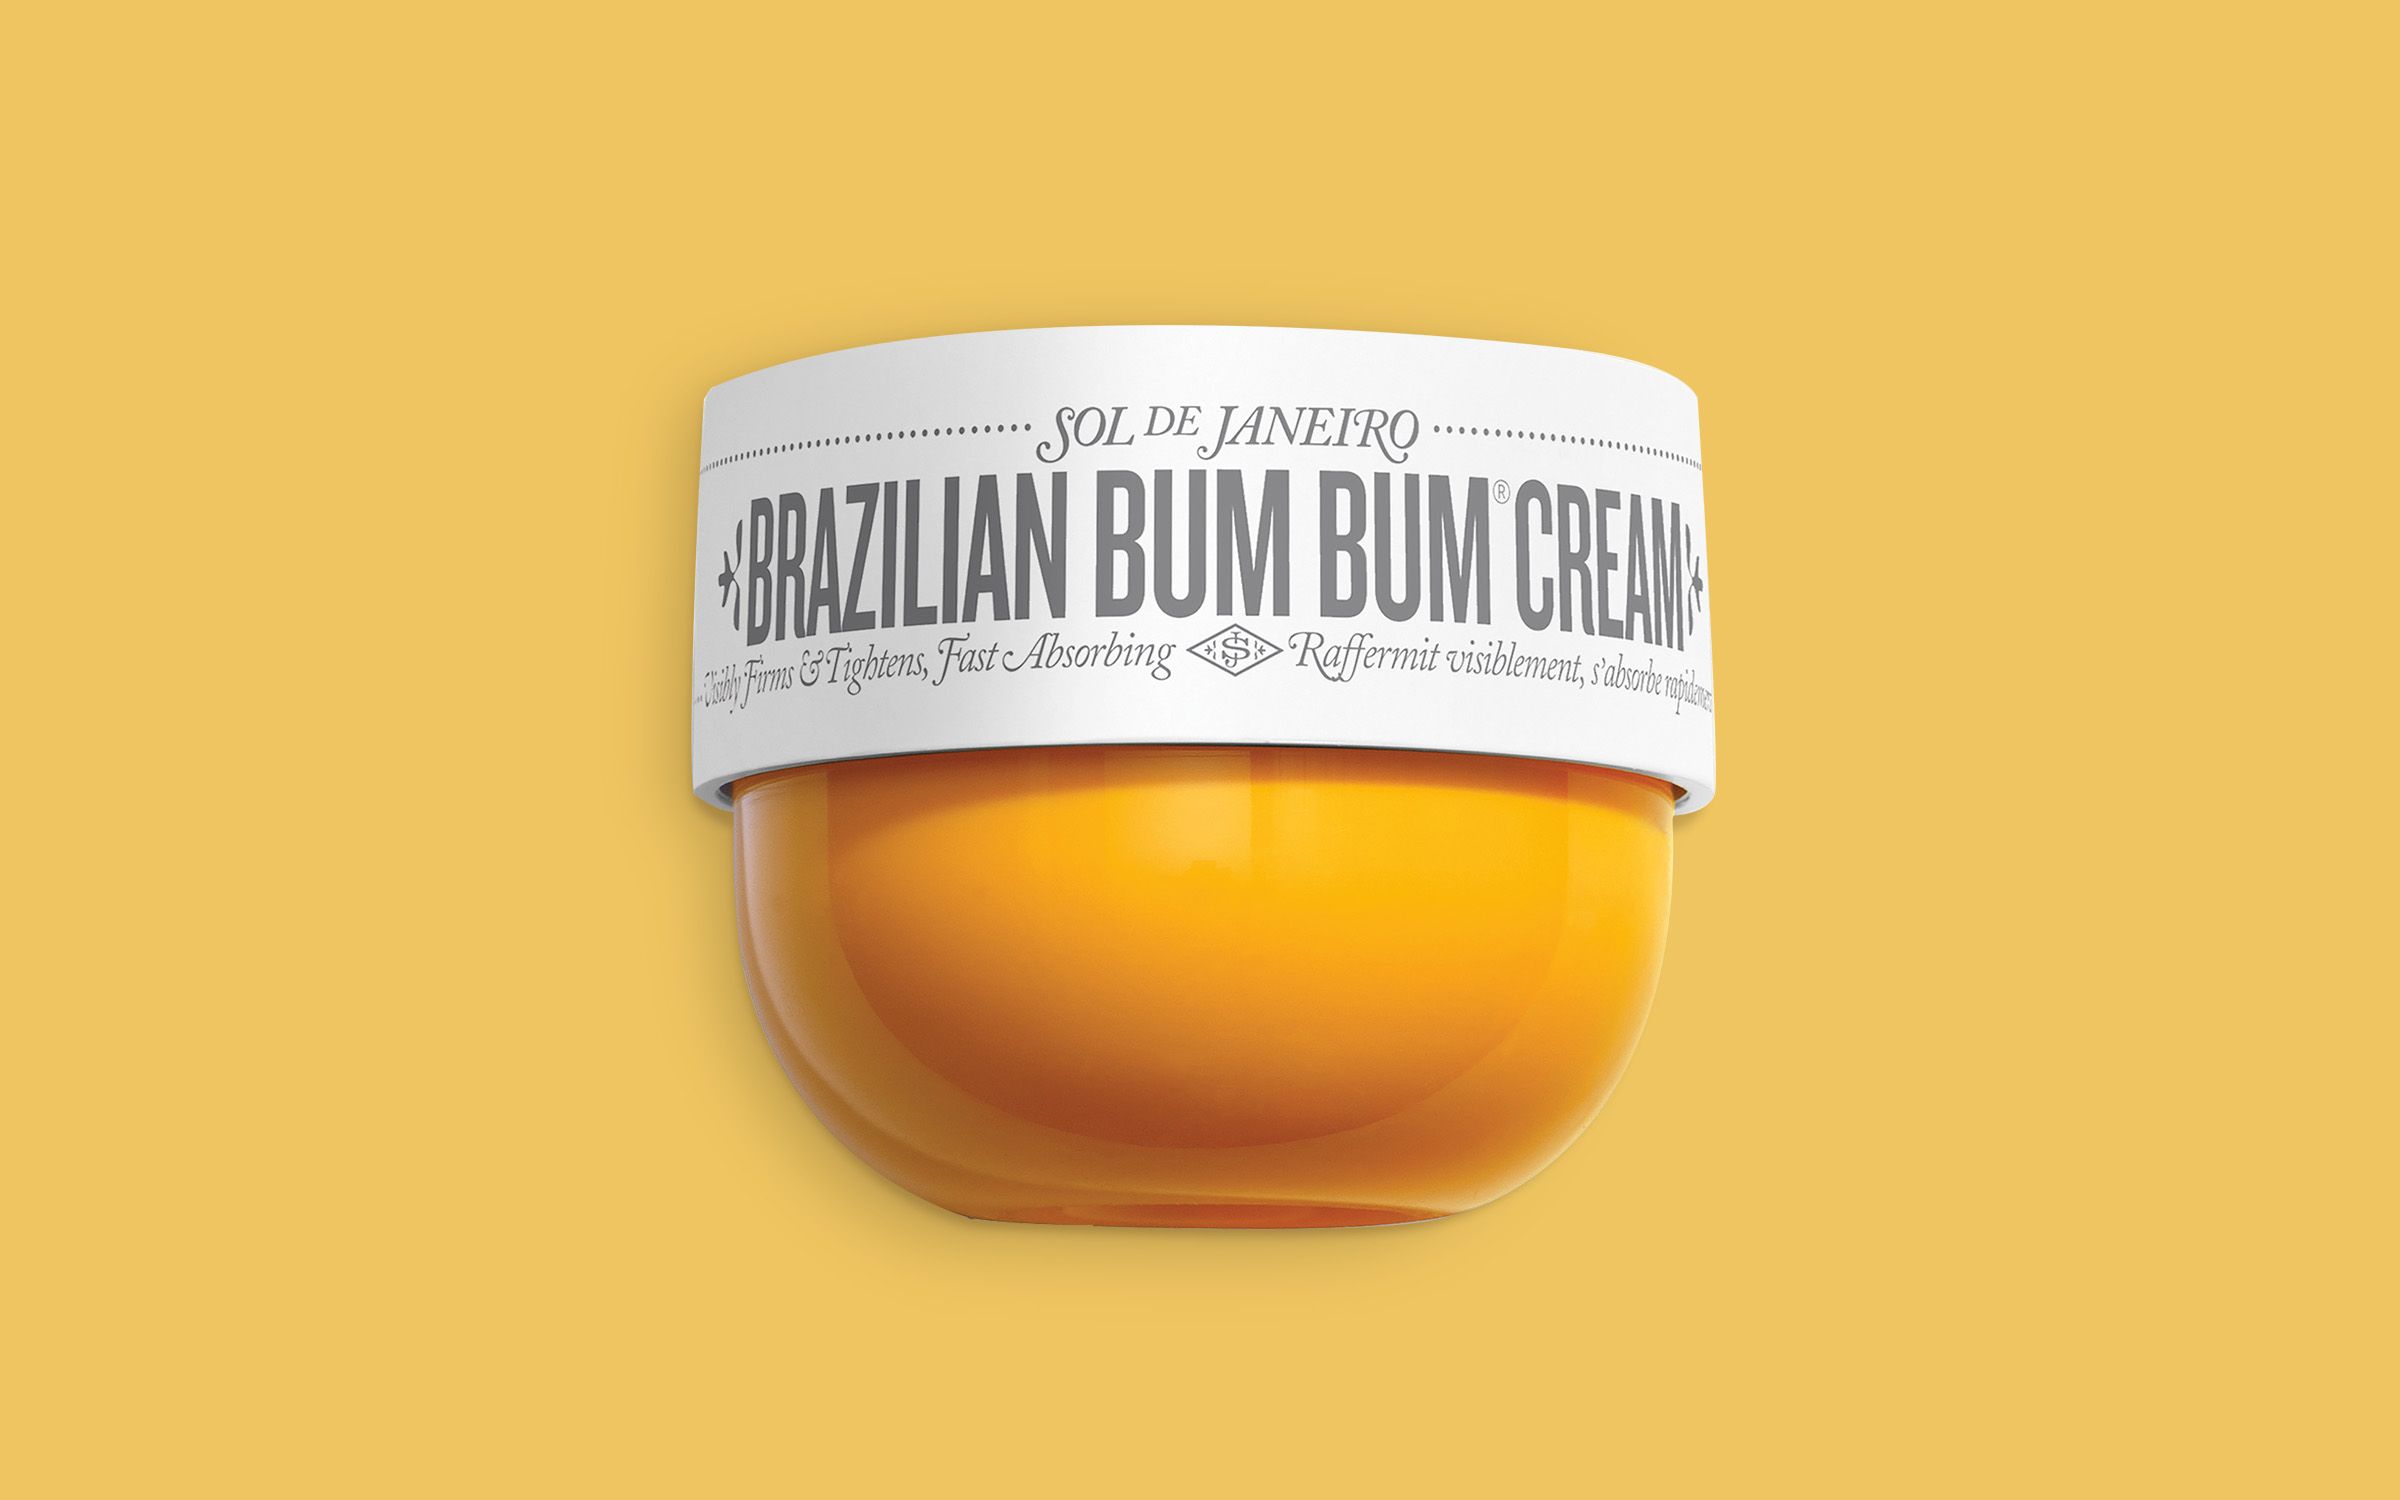 On trial: Sol de Janeiro Brazilian Bum Bum Cream